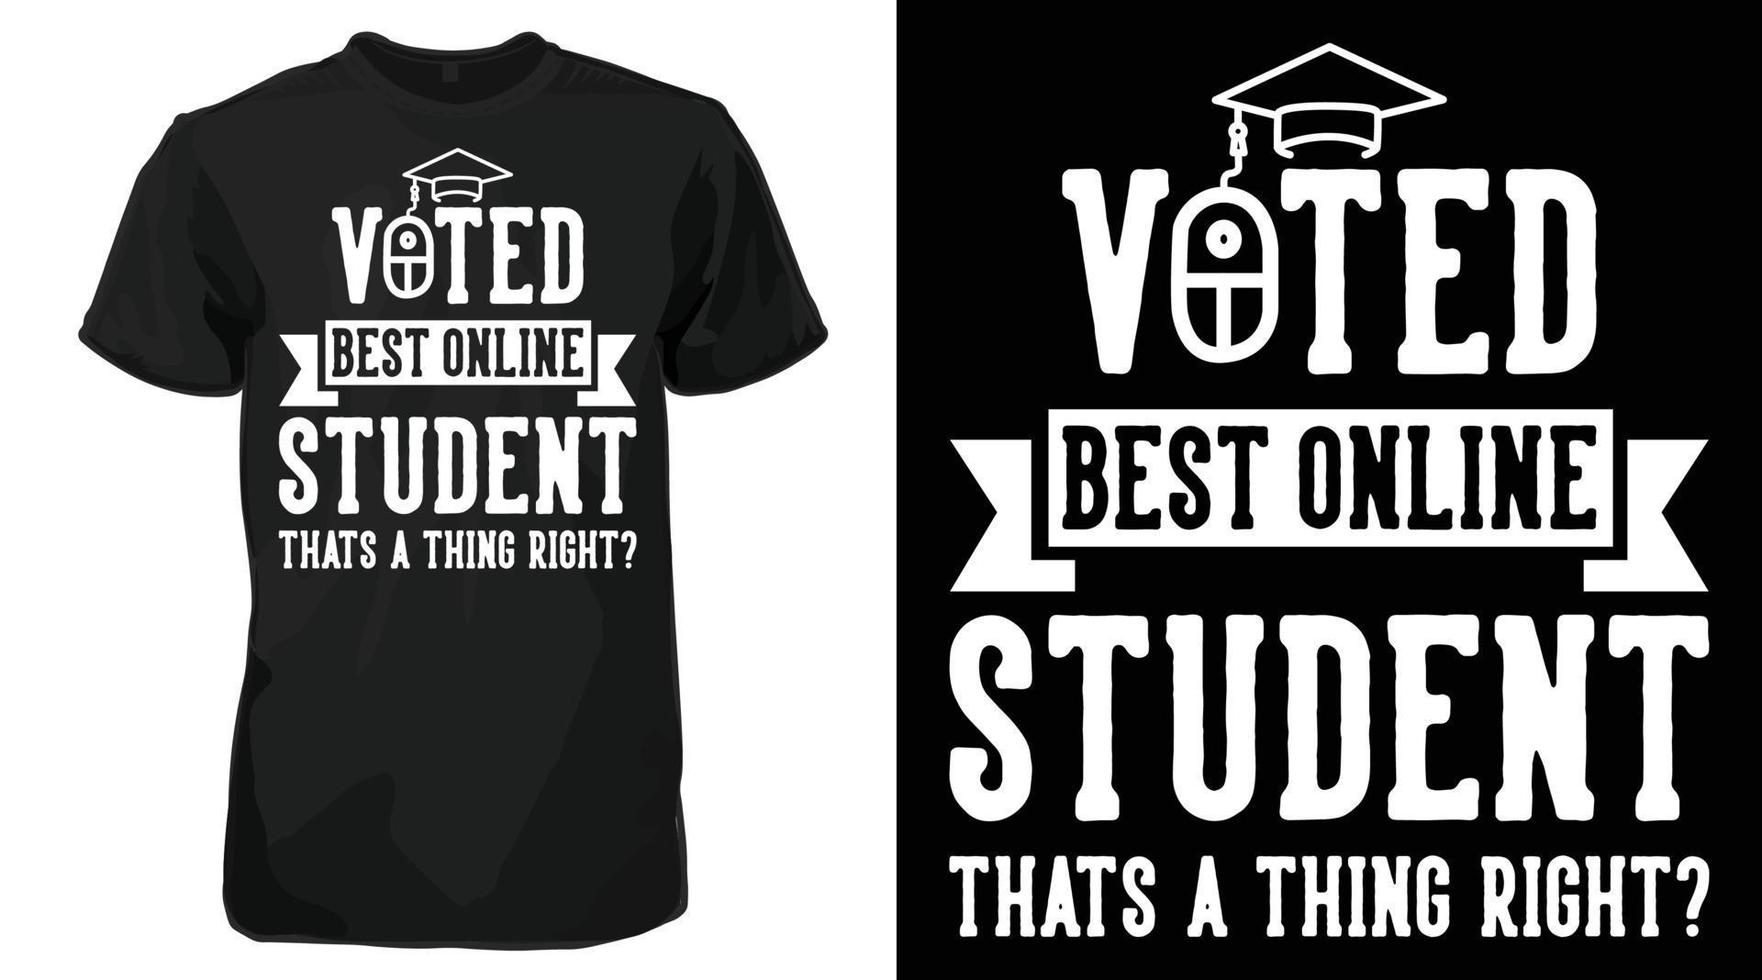 gewählter lustiger T - Shirt des besten on-line-Studenten vektor